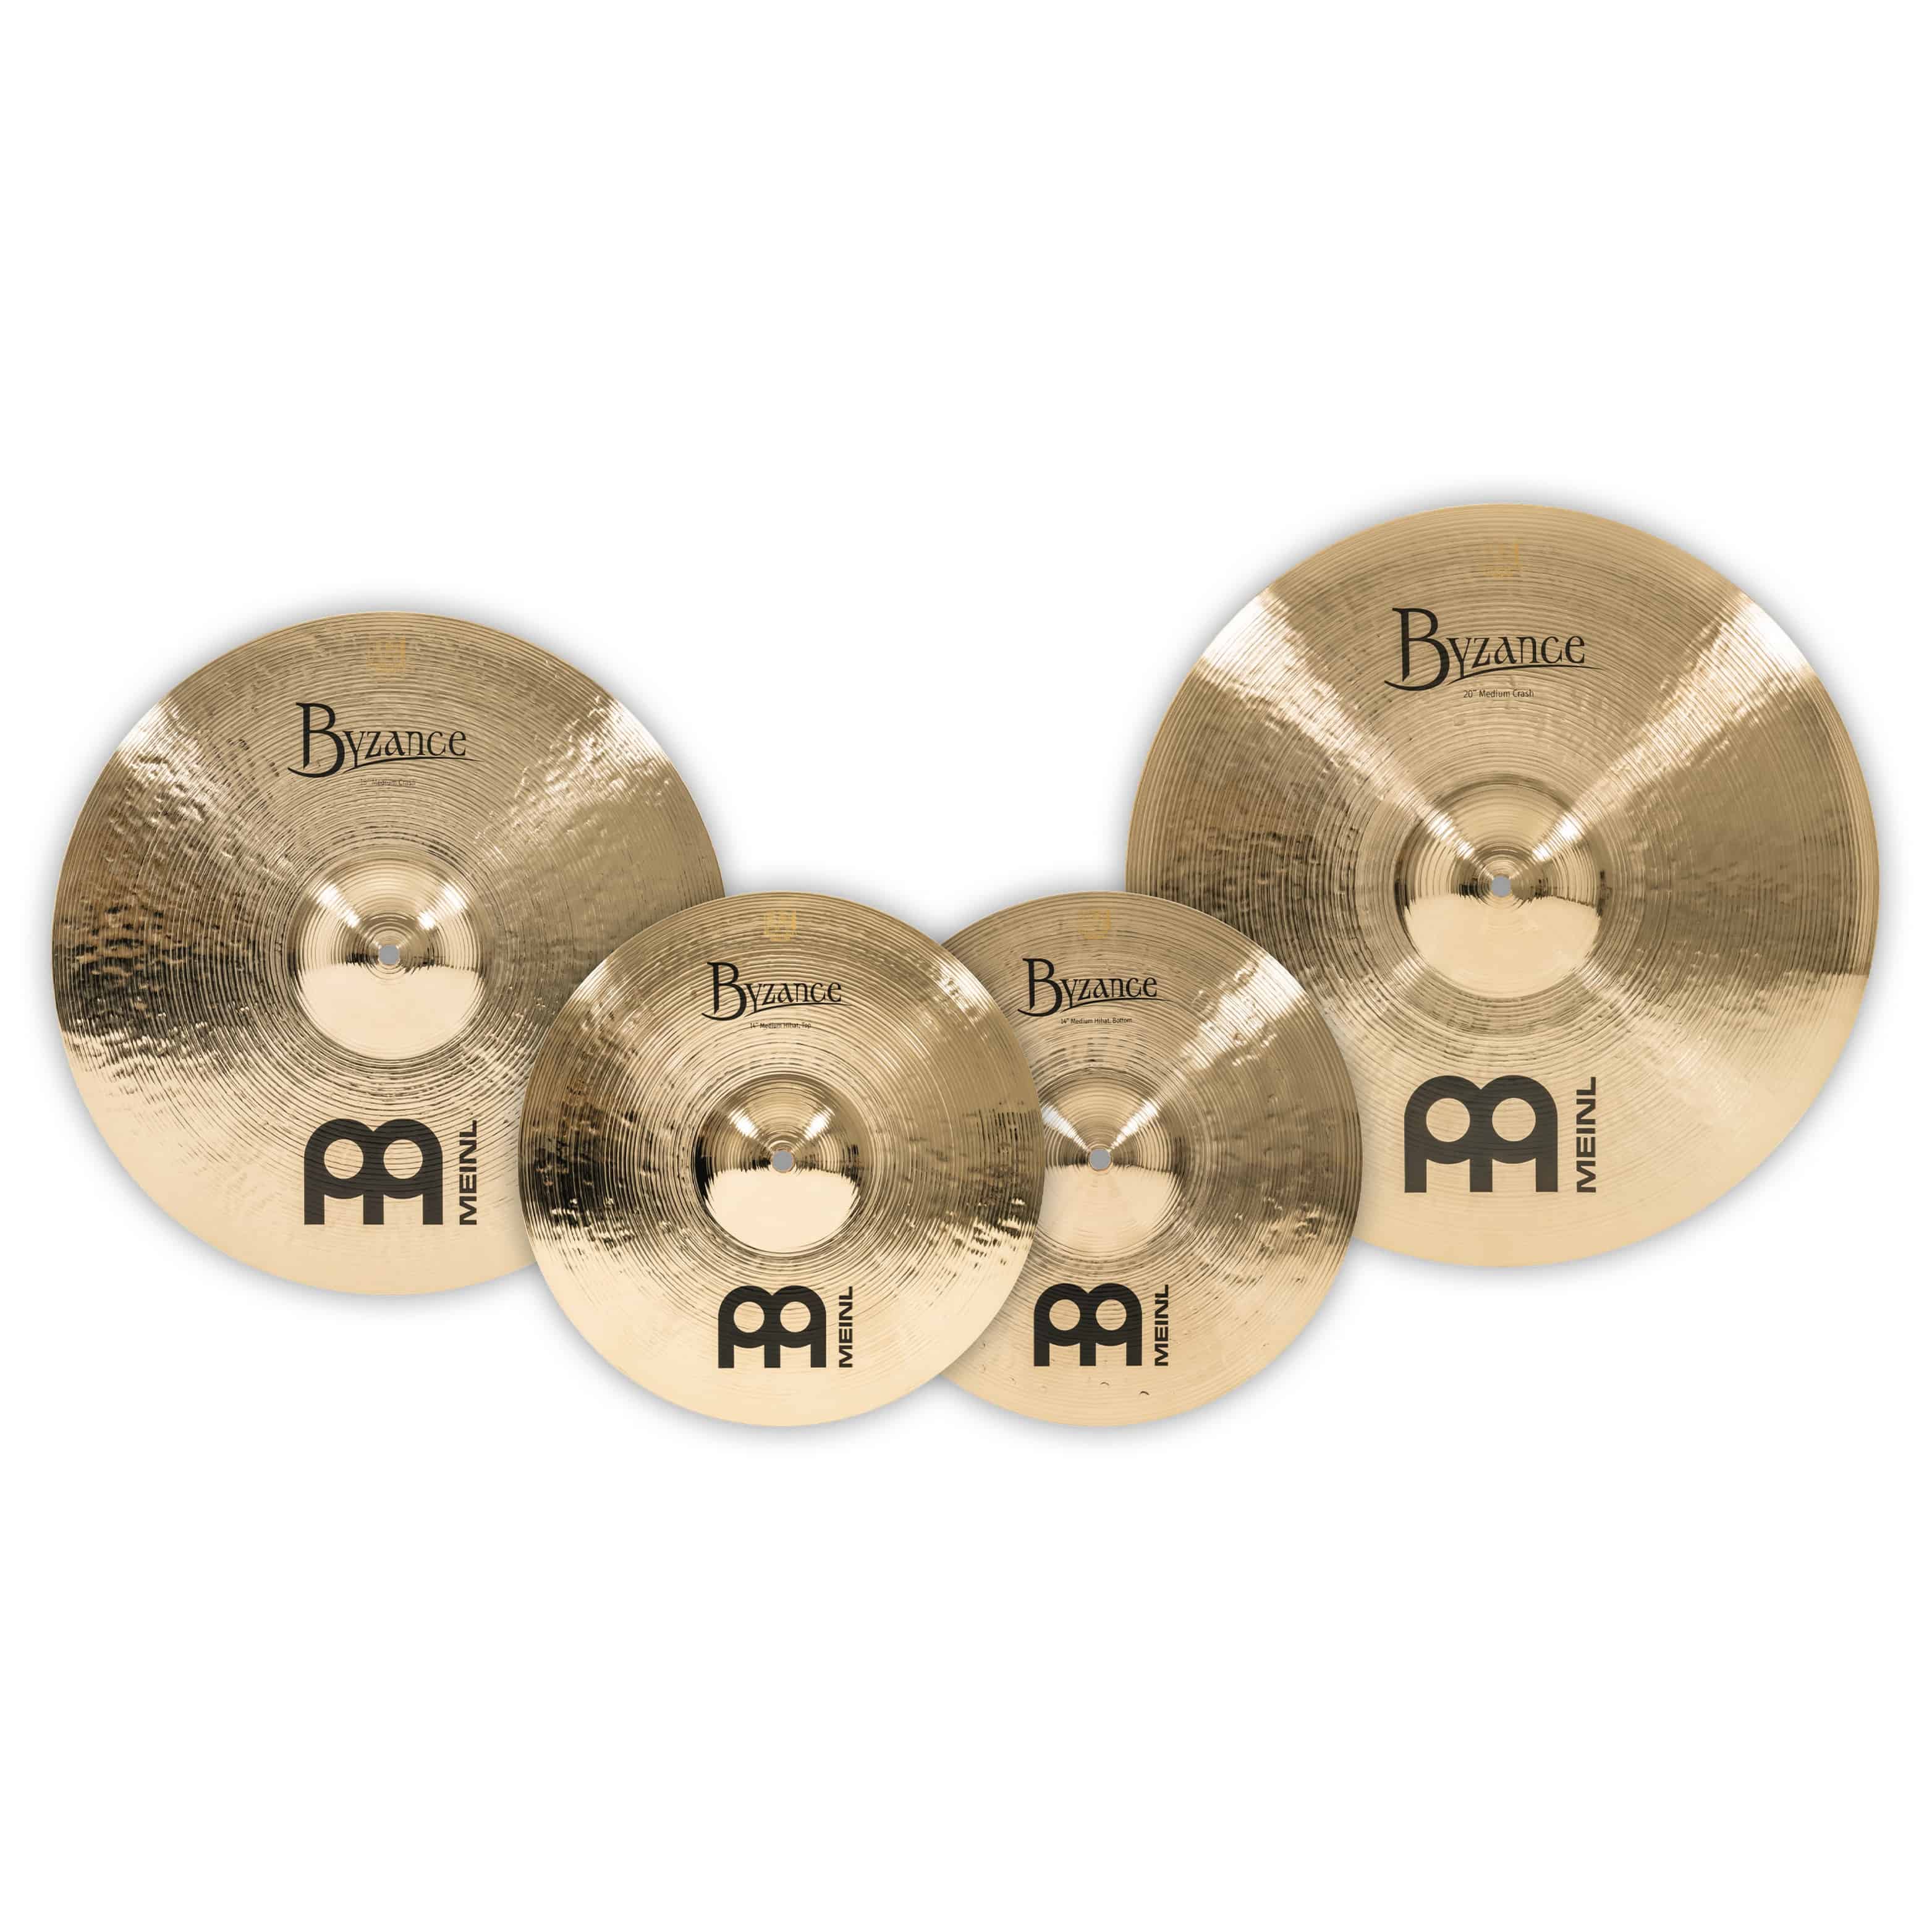 Meinl Cymbals BB-CS1 - Byzance Brilliant Complete Cymbal Set 1